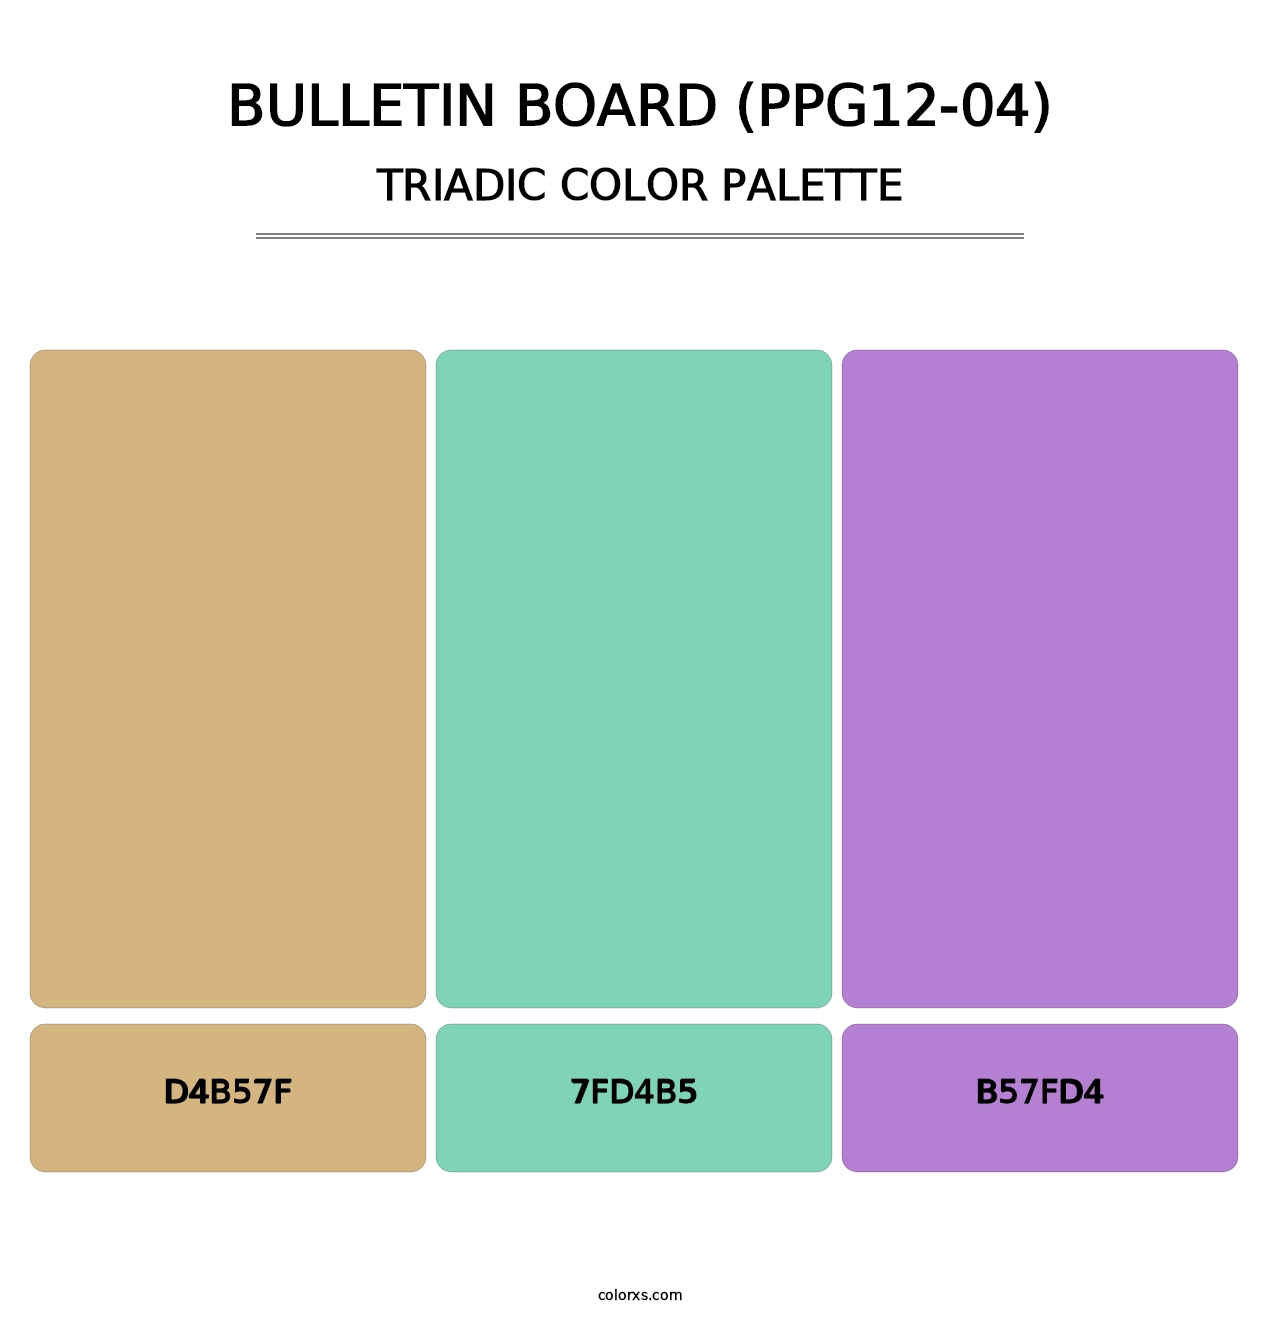 Bulletin Board (PPG12-04) - Triadic Color Palette